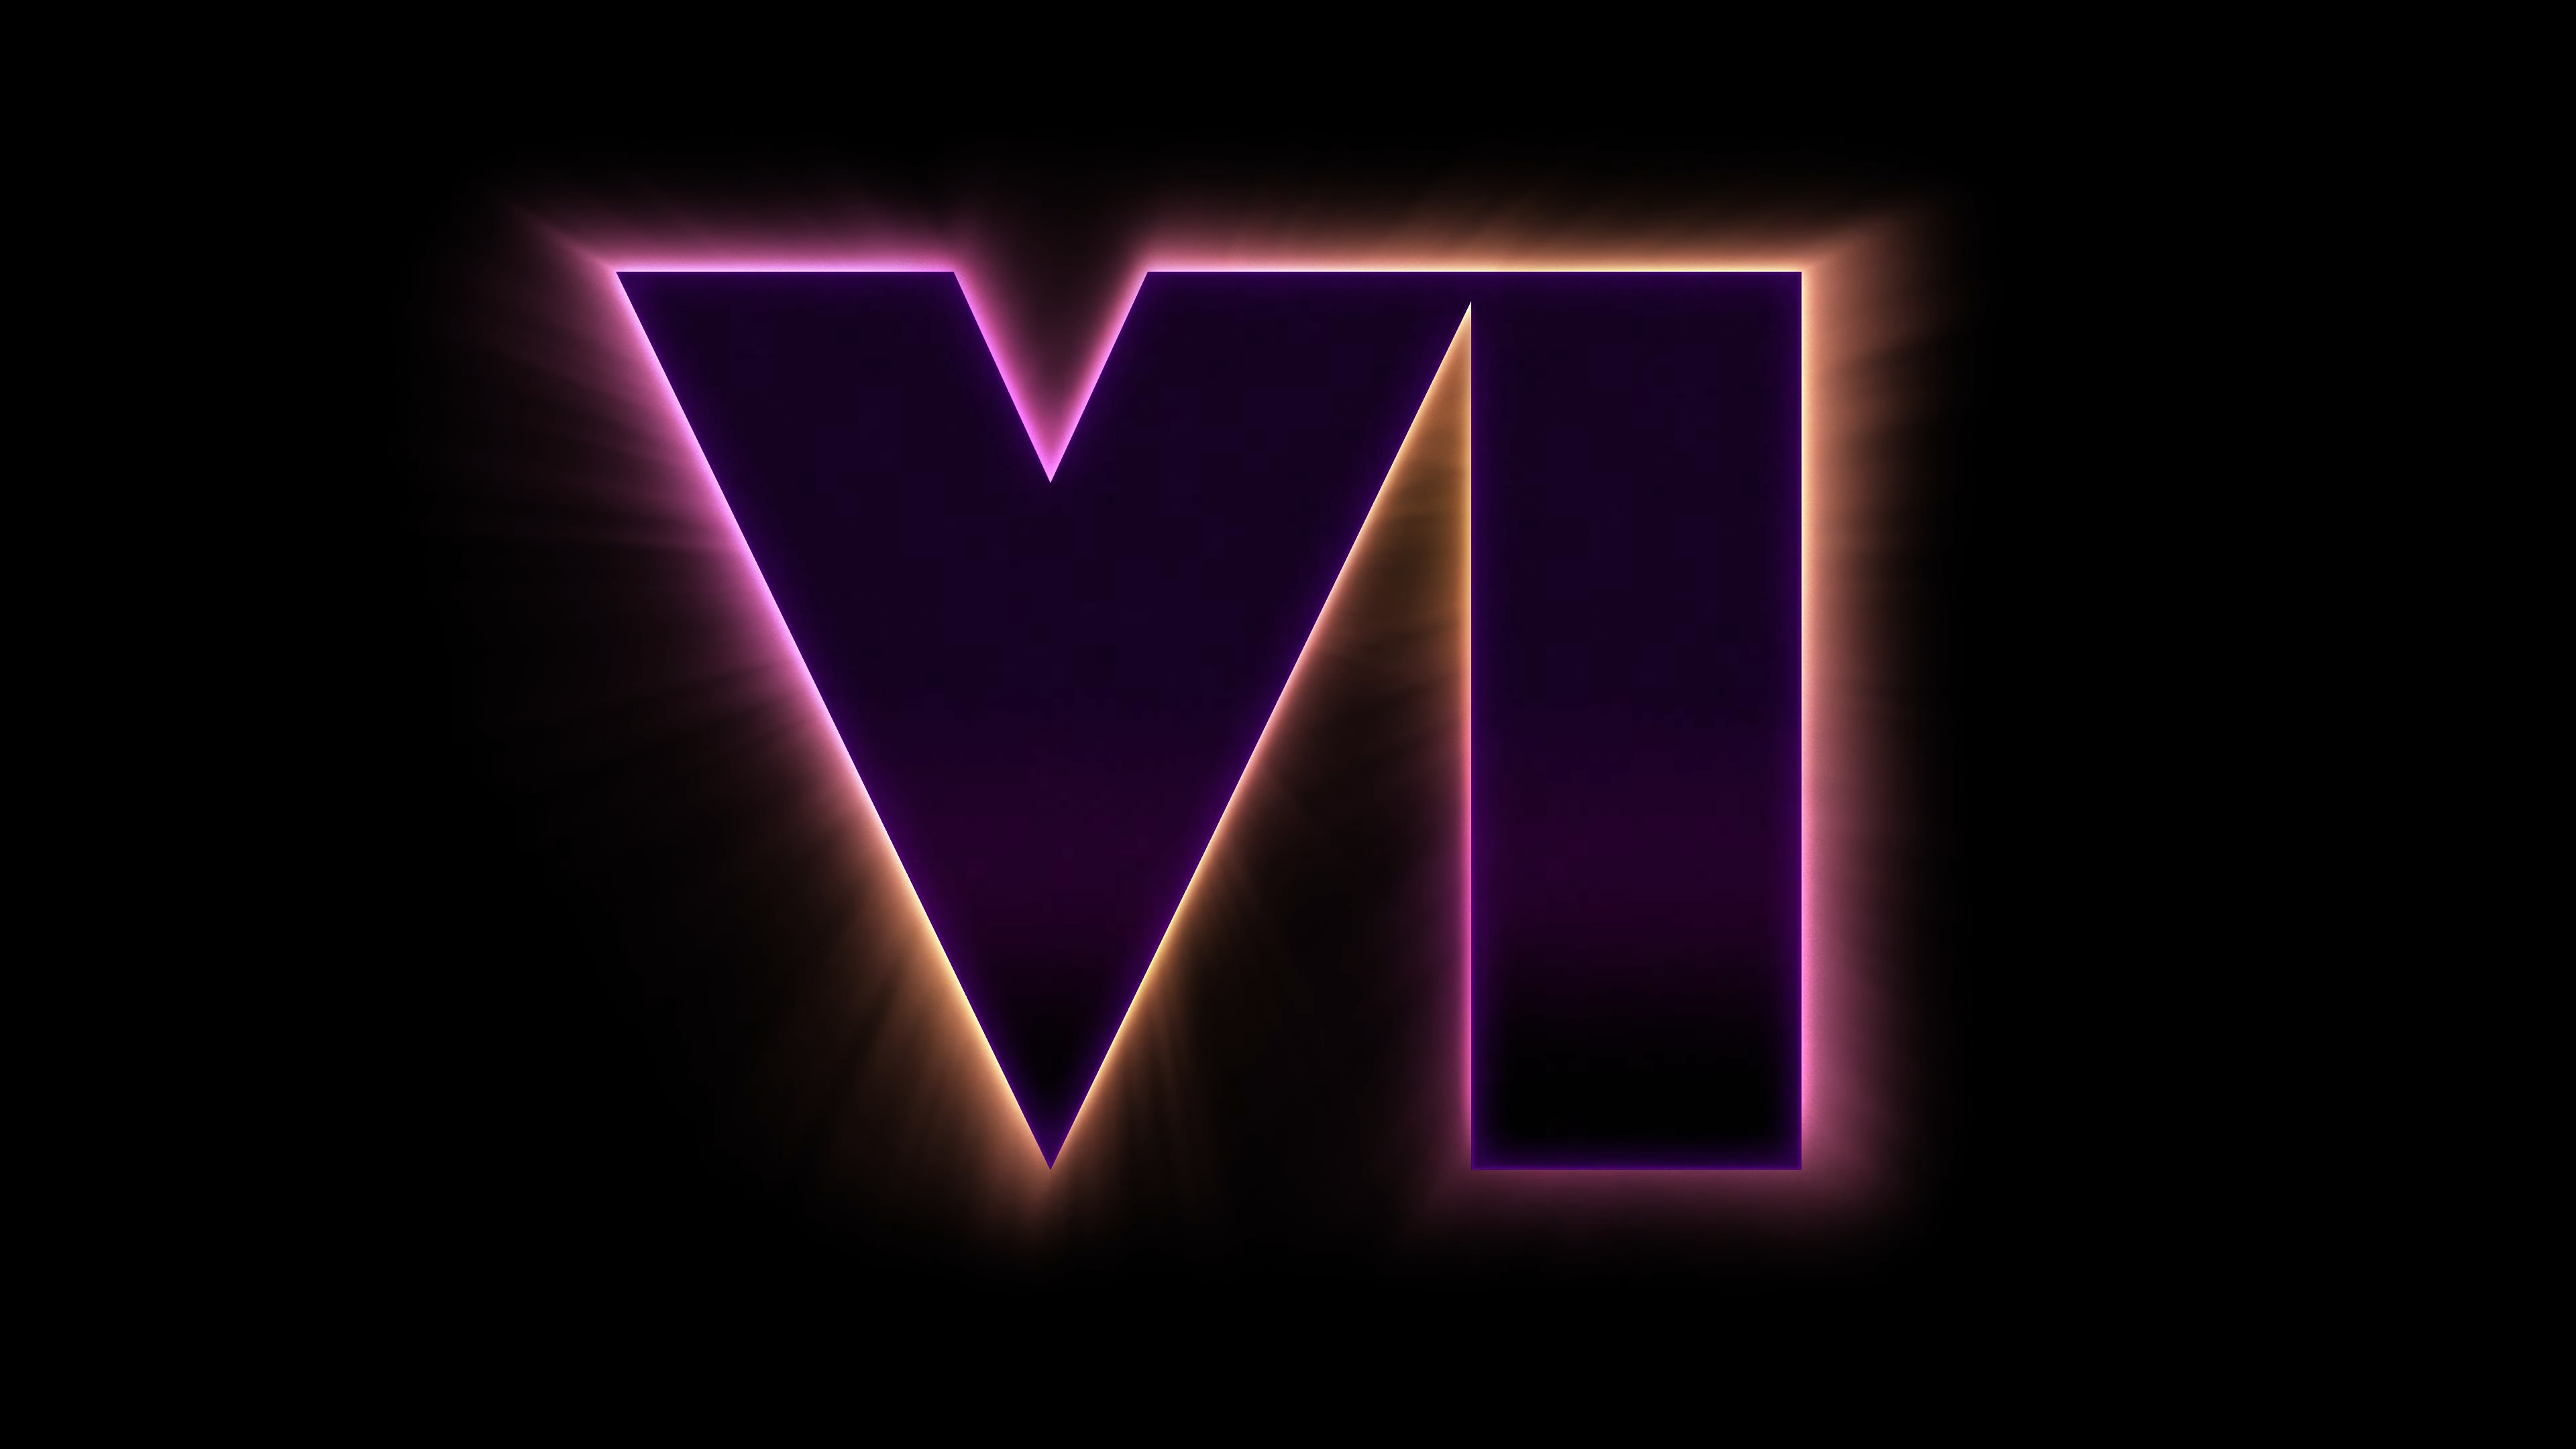 General 3840x2160 Grand Theft Auto VI logo screen shot minimalism simple background Roman numerals glowing Grand Theft Auto Rockstar Games black background